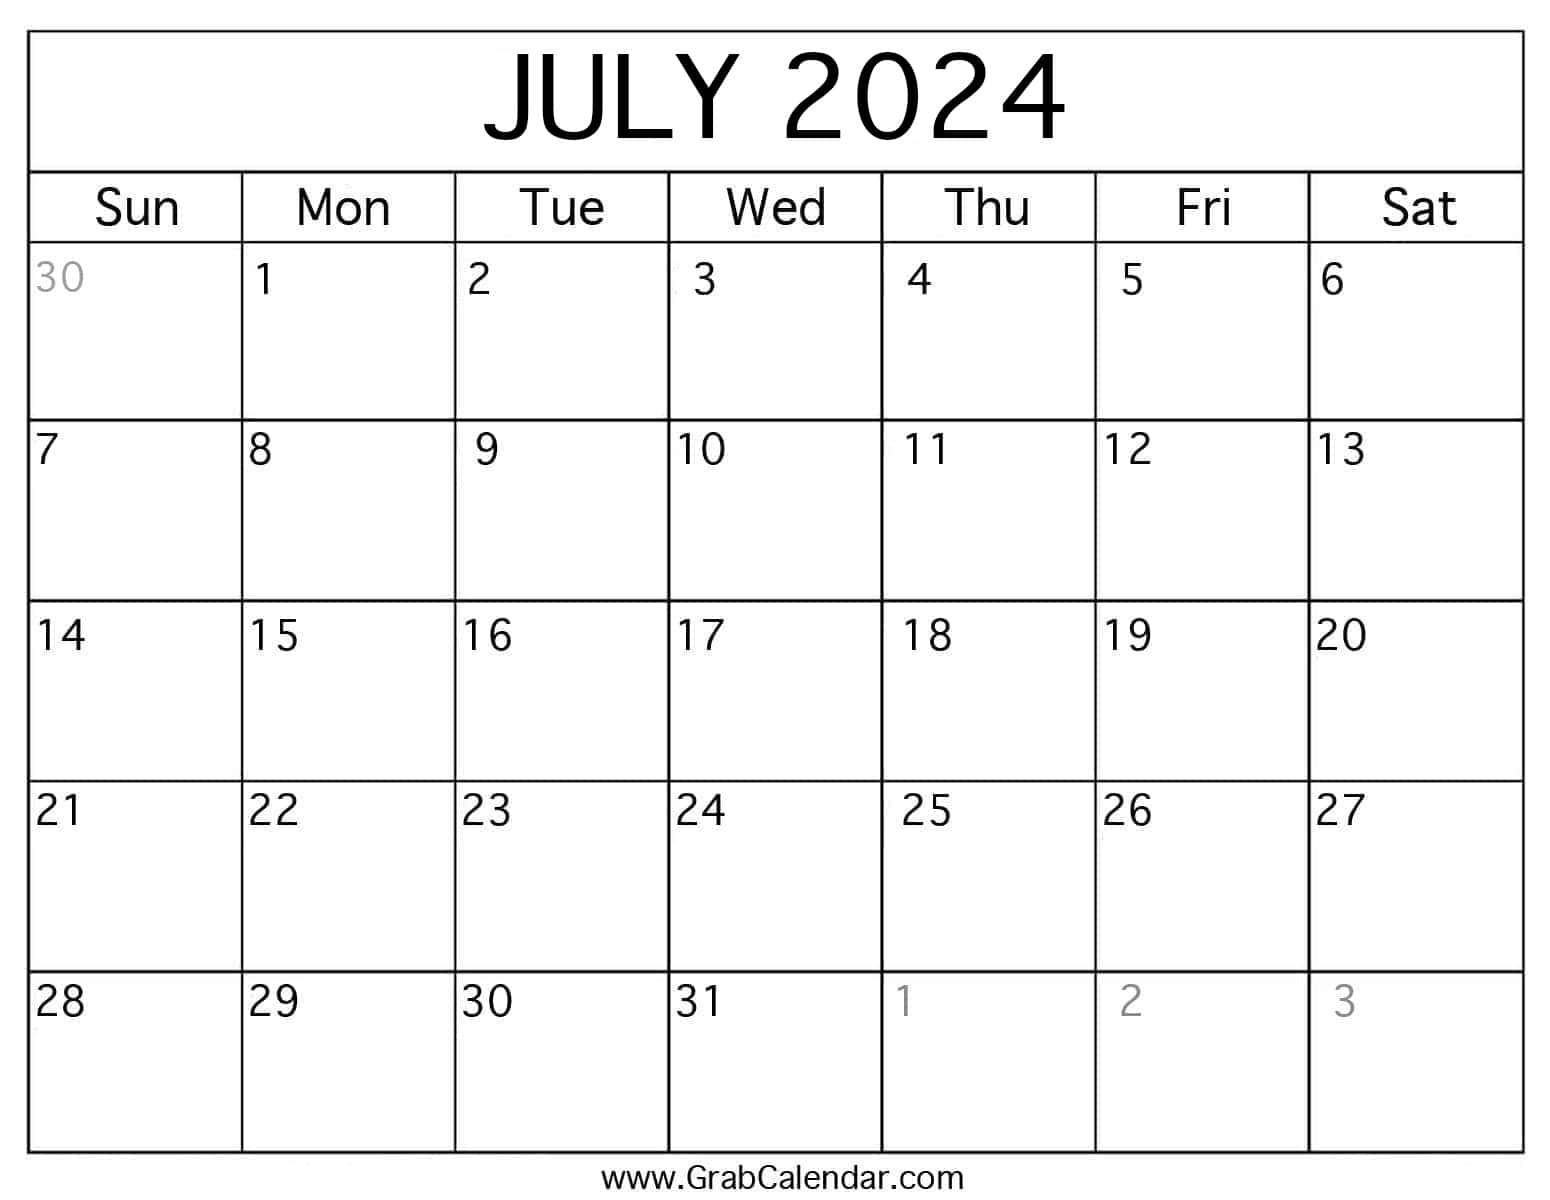 Printable July 2024 Calendar regarding Free July 2024 Calendar